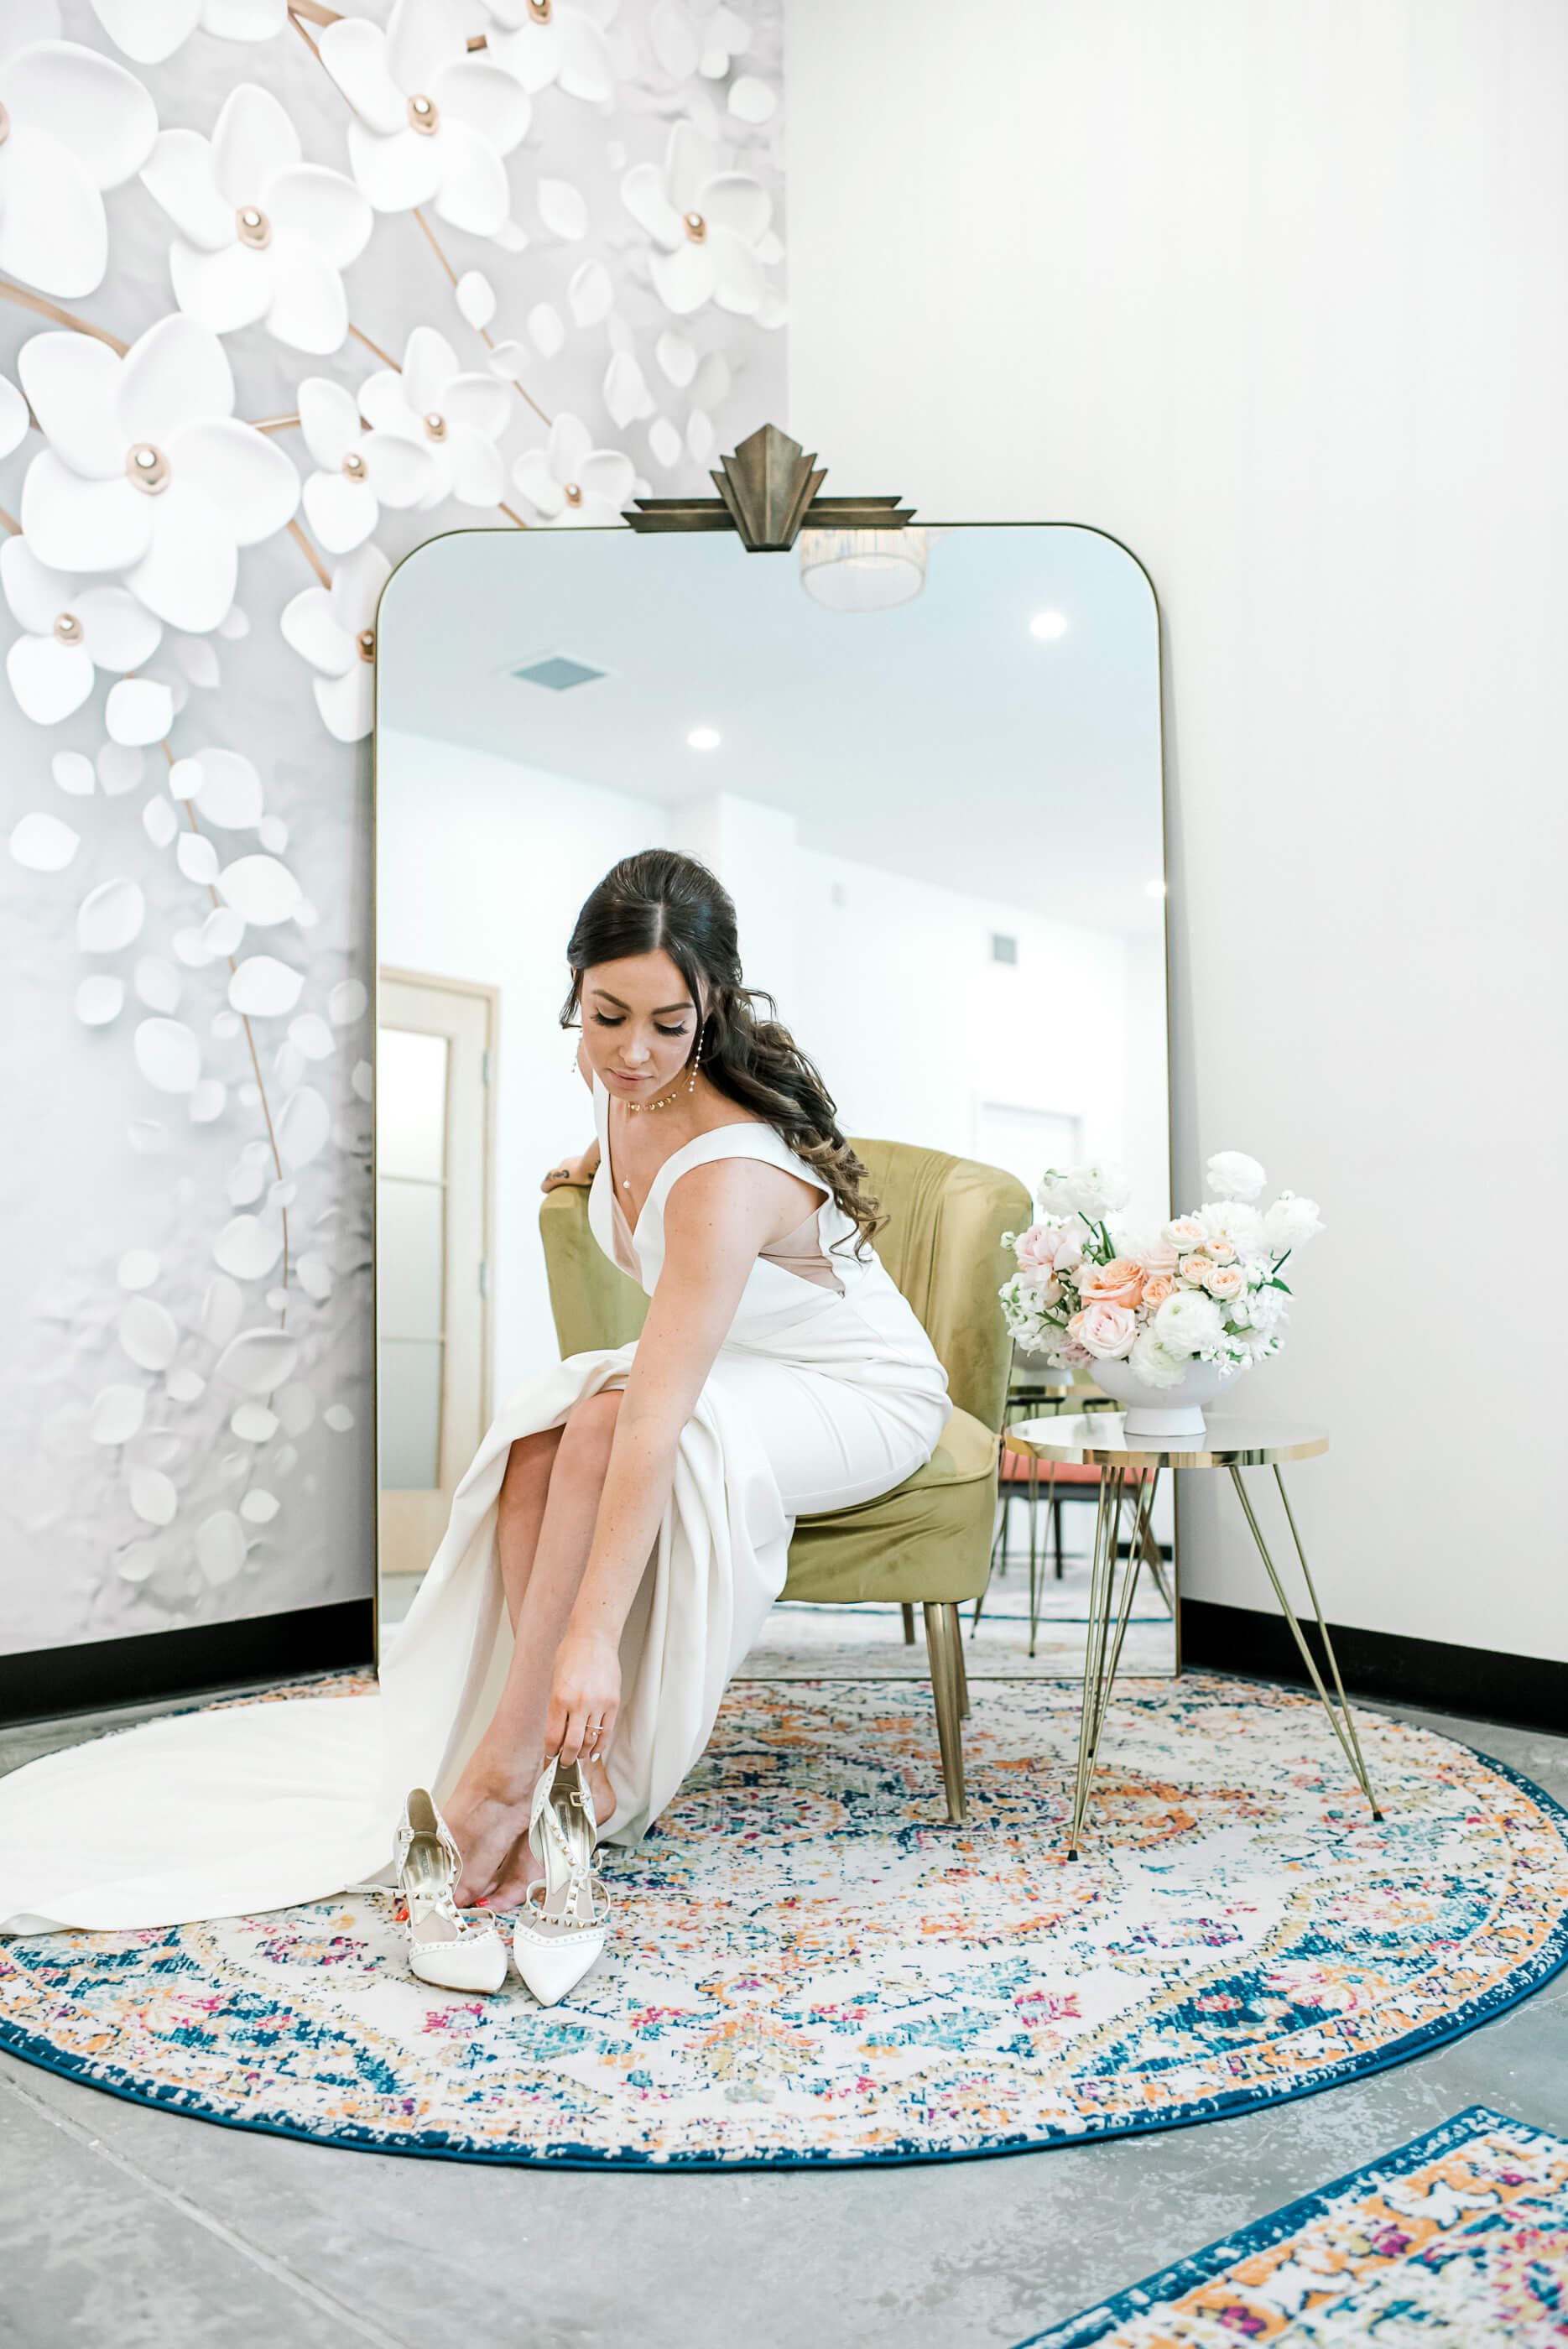 Bride-sitting-in0front-of-mirror.jpg